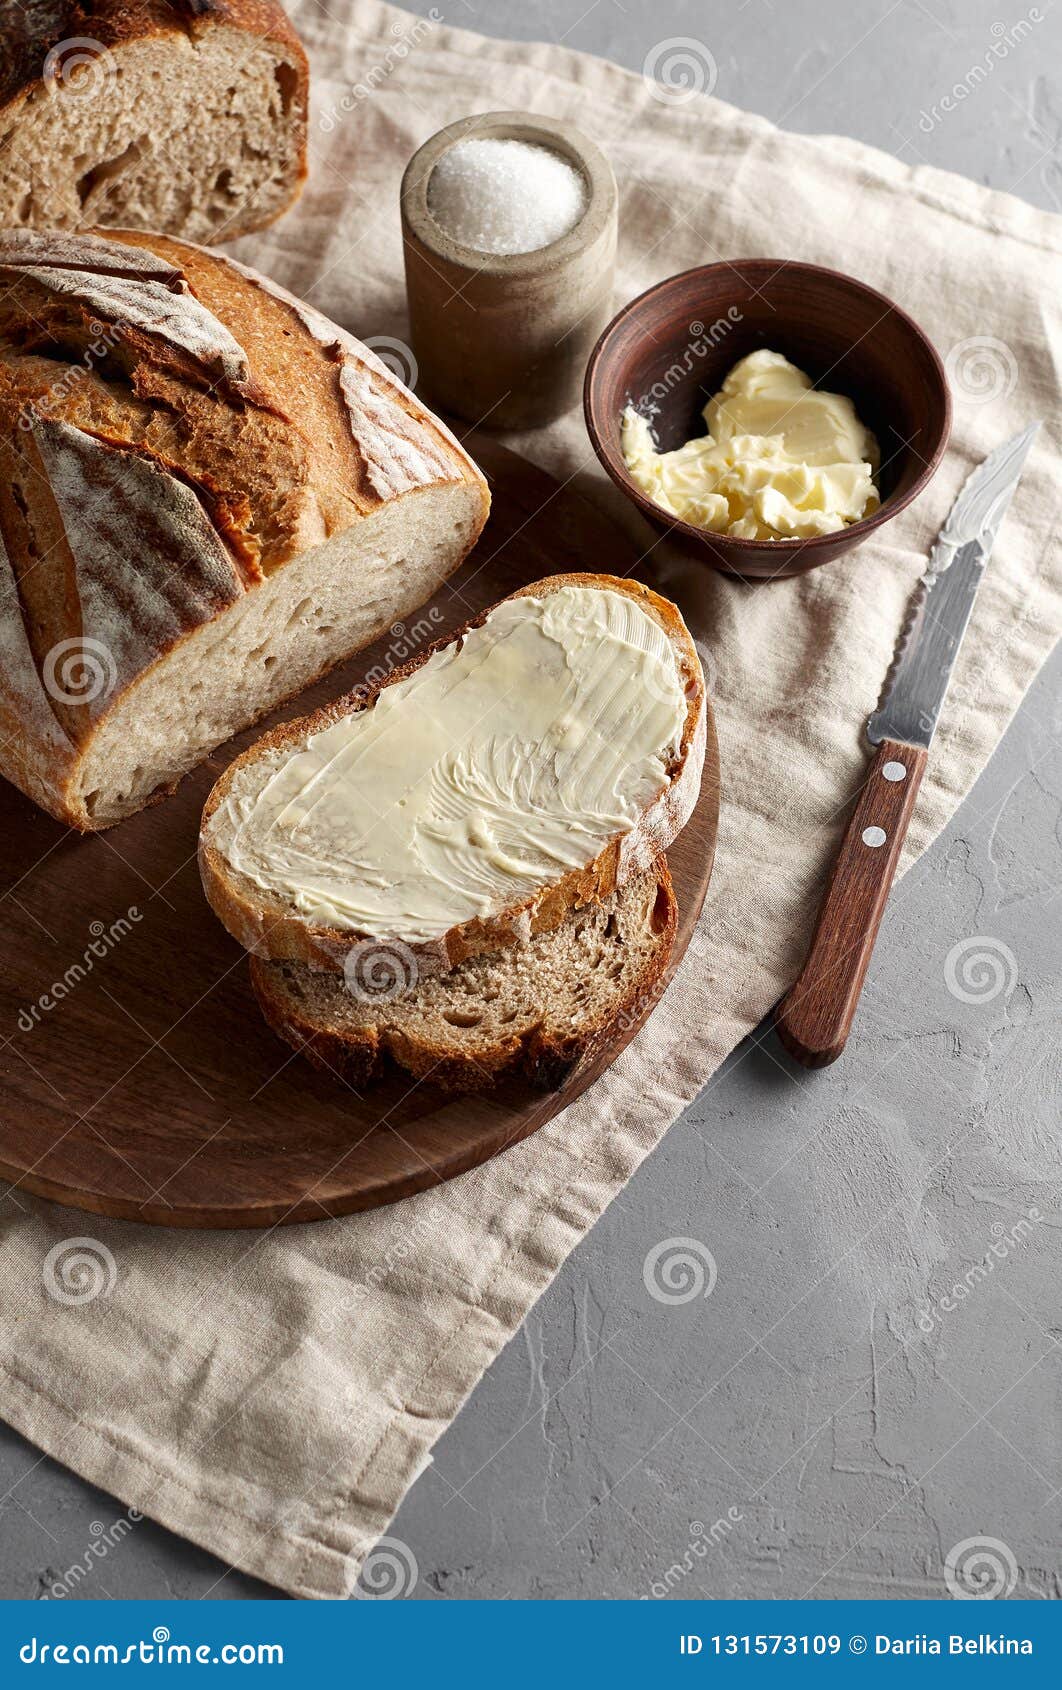 CONCRETE TOAST bread slice